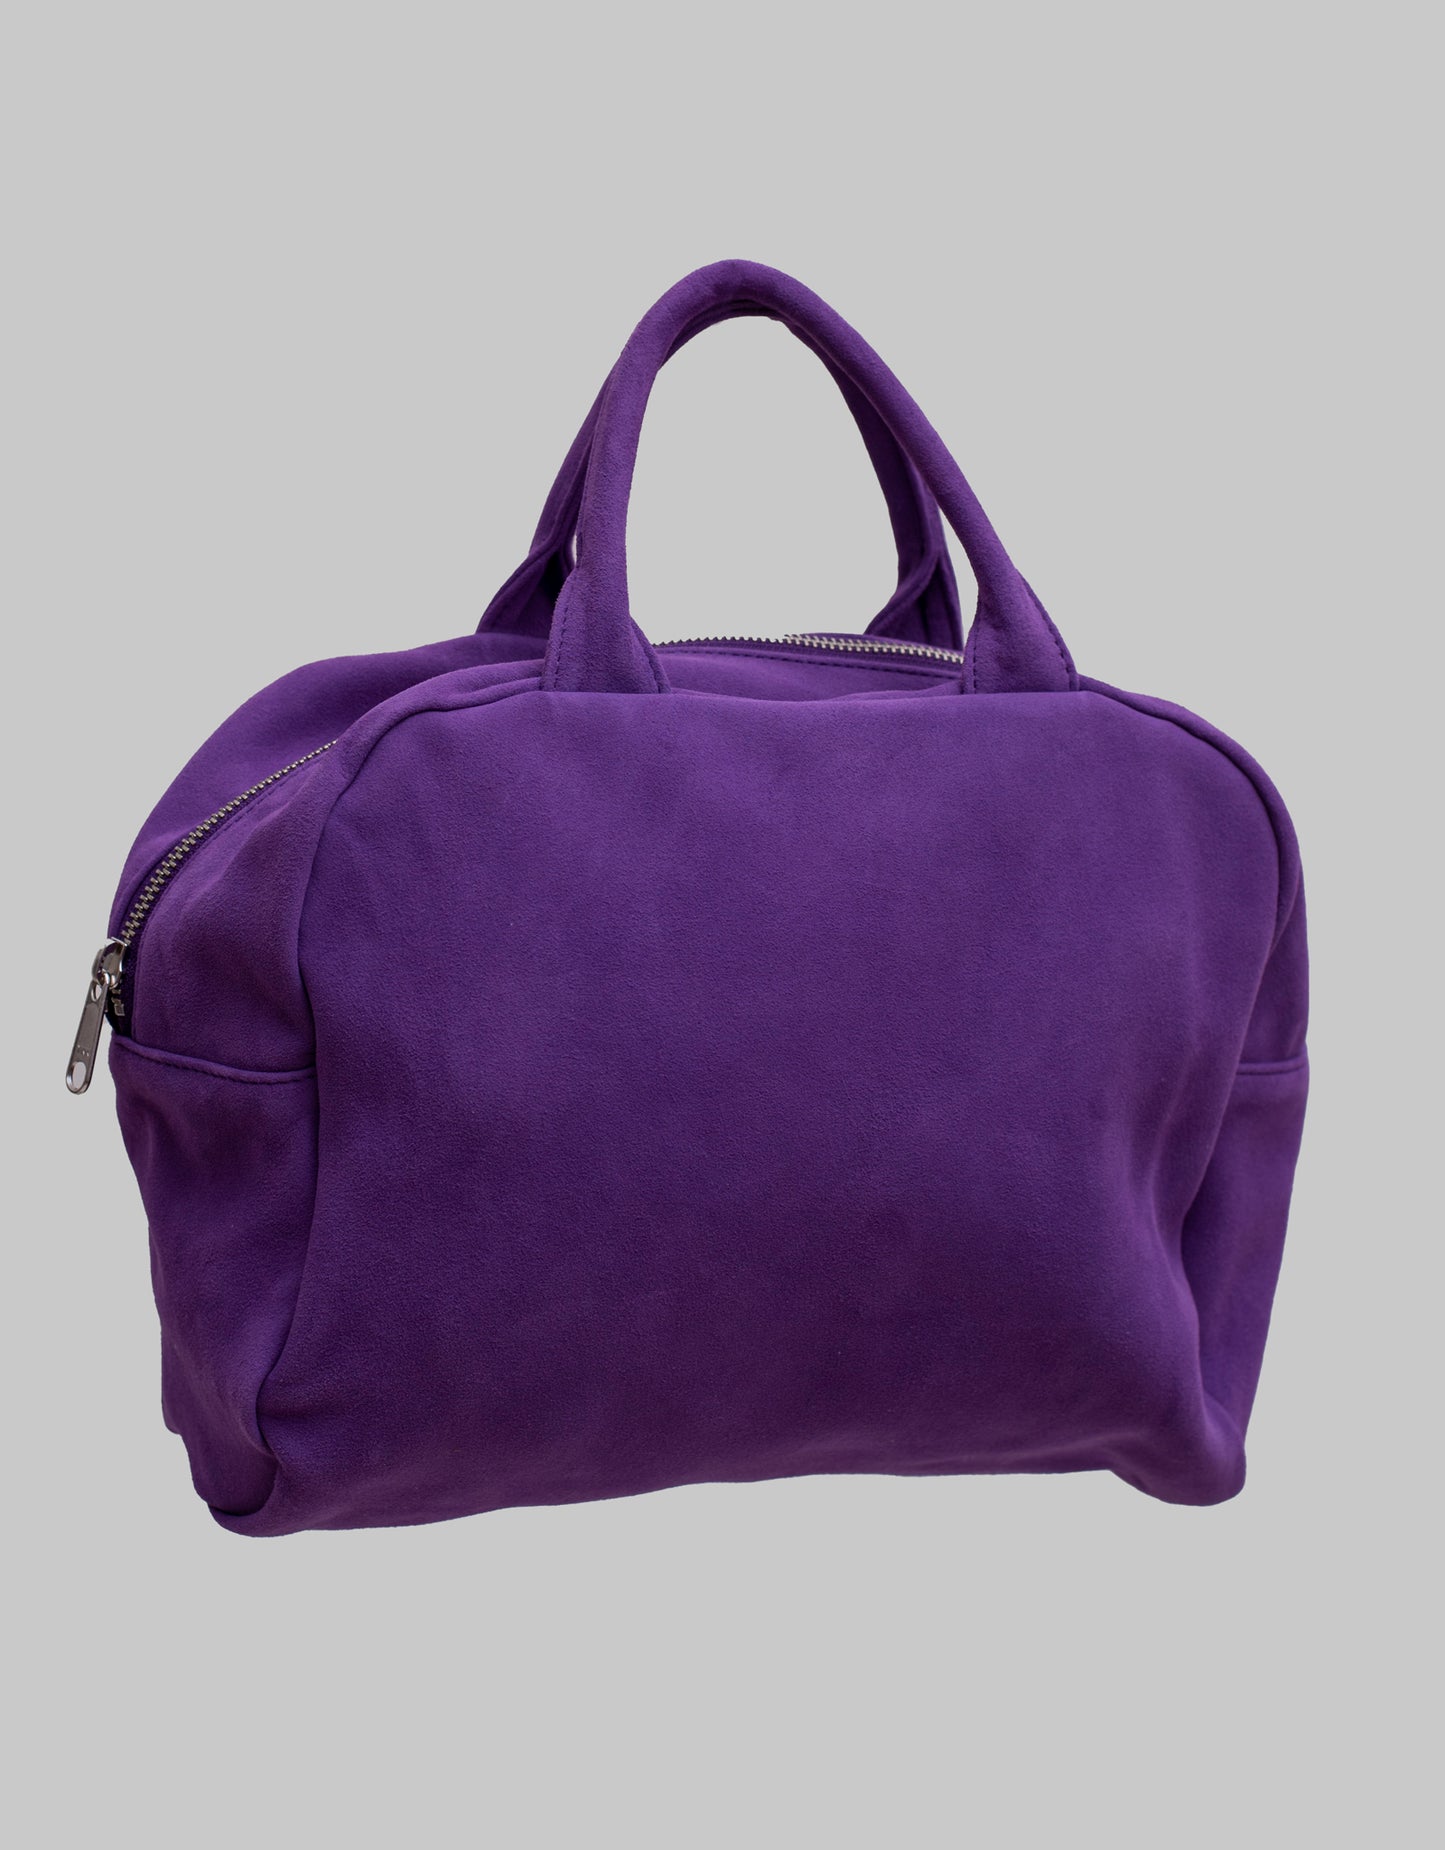 Small Purple Bag